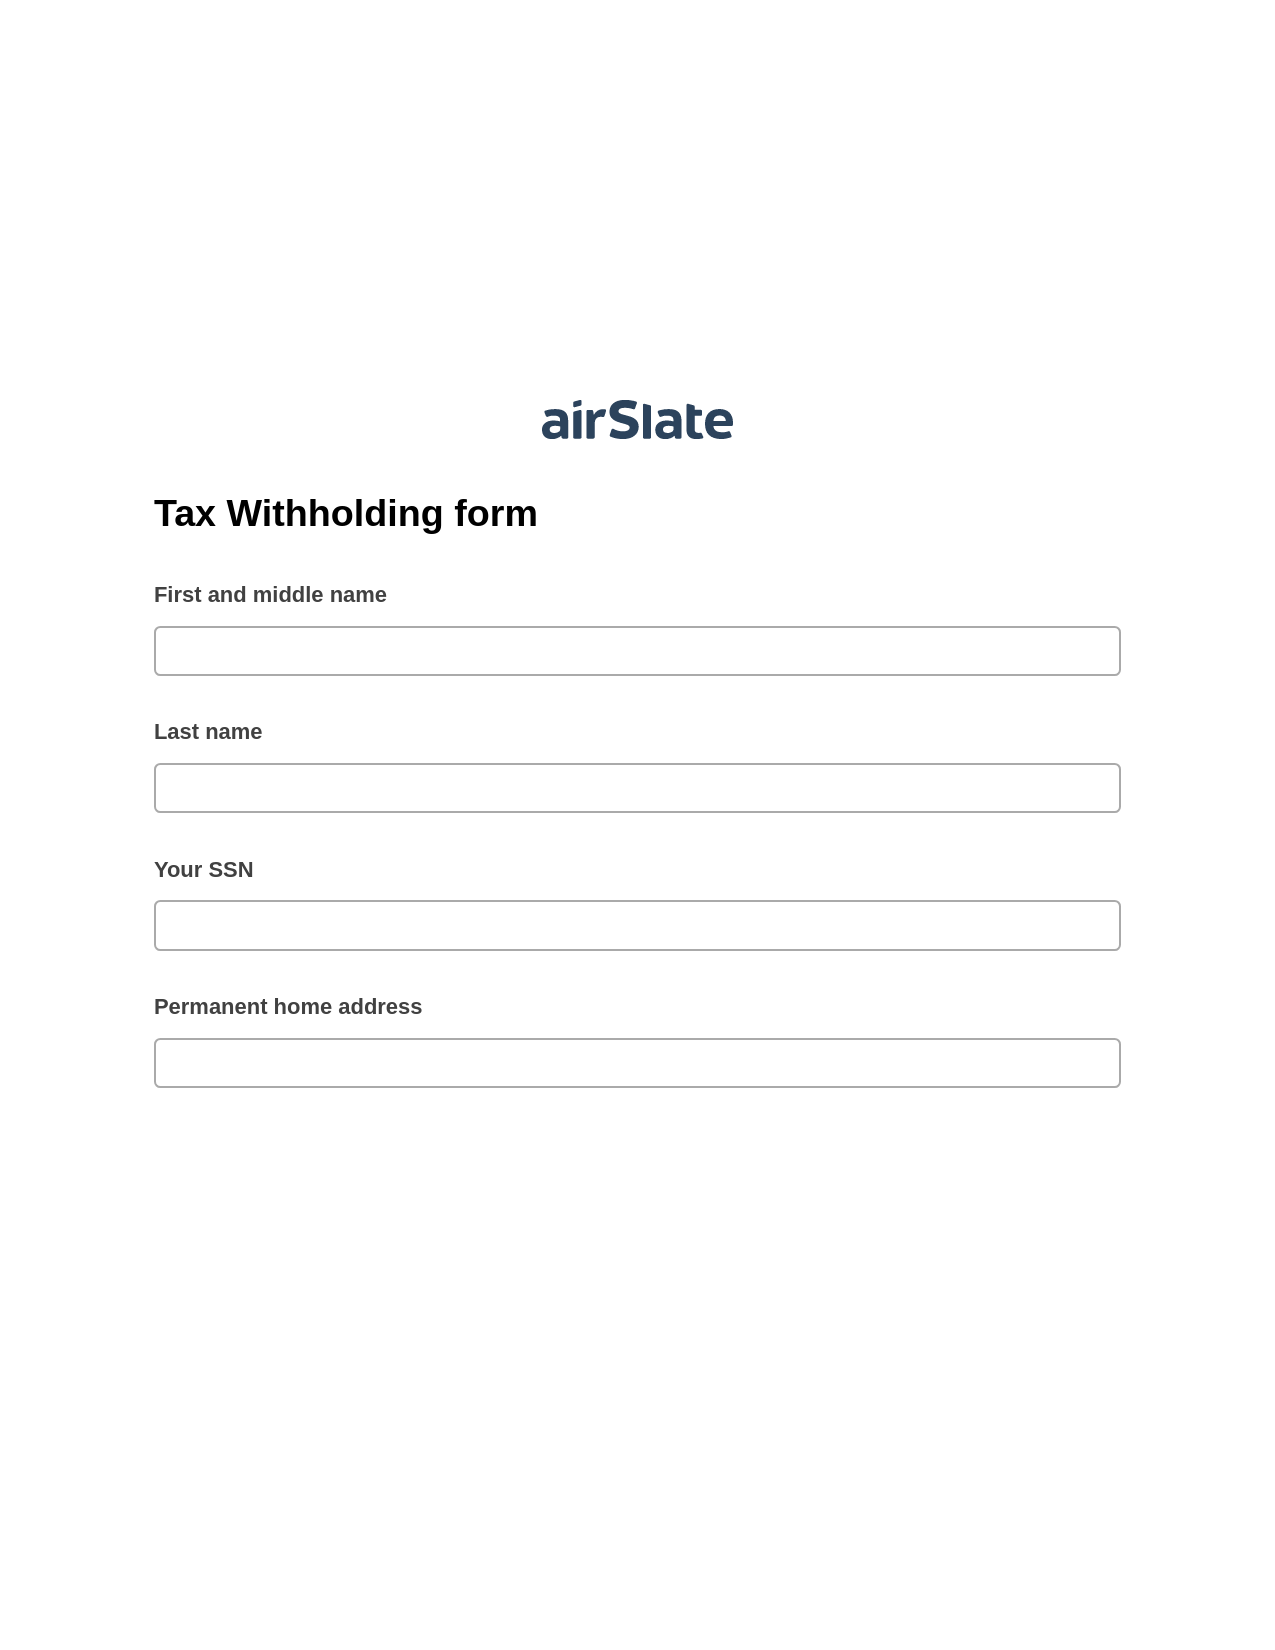 Tax Withholding form Pre-fill Slate from MS Dynamics 365 Records Bot, Invoke Salesforce Process Bot, Slack Notification Postfinish Bot